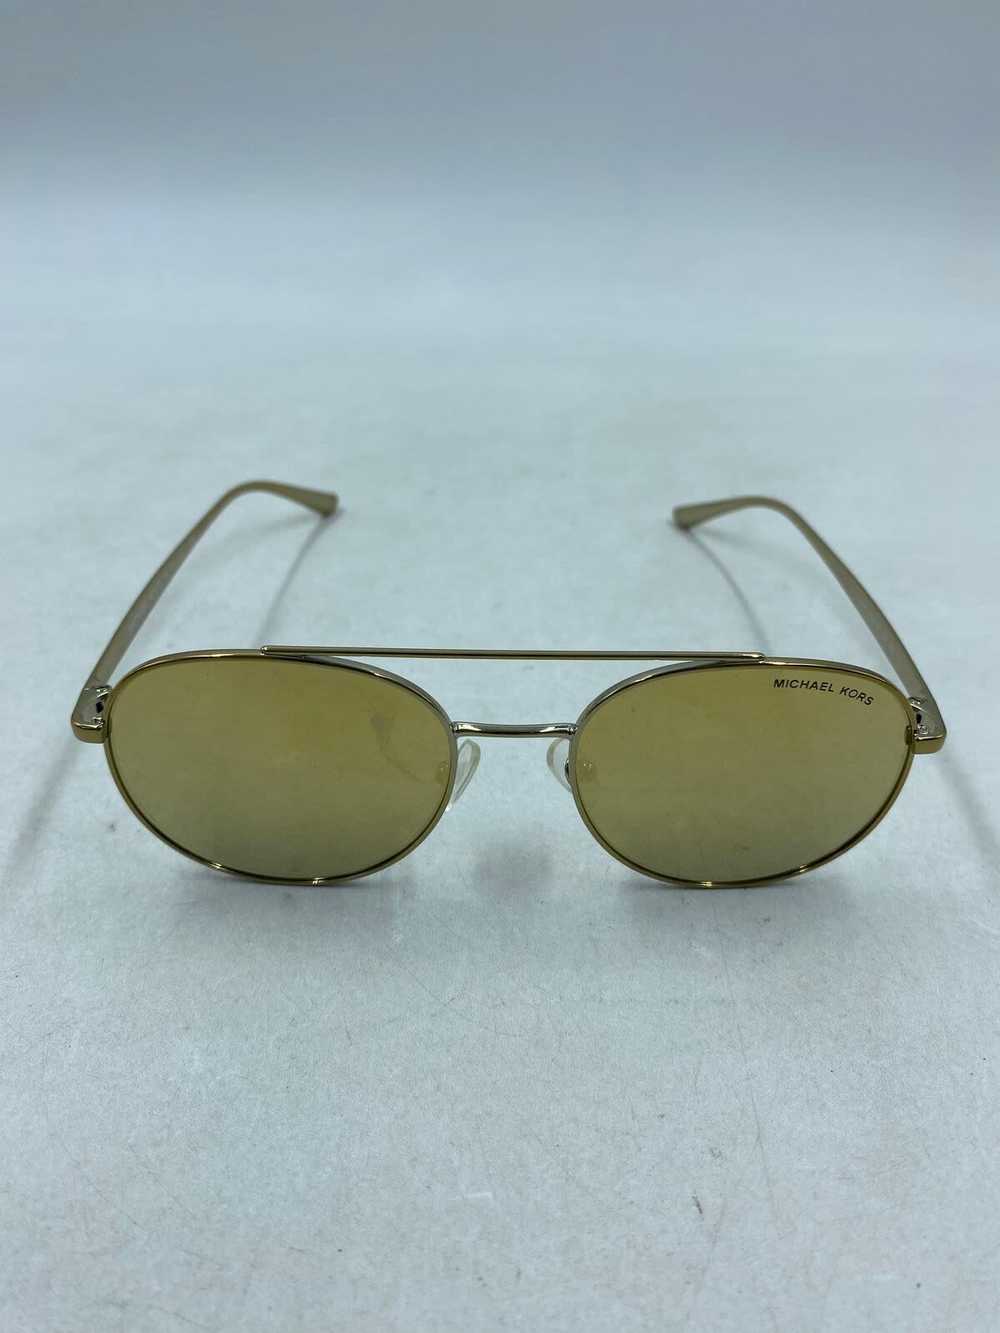 Michael Kors Gold Sunglasses - Size One Size - image 2